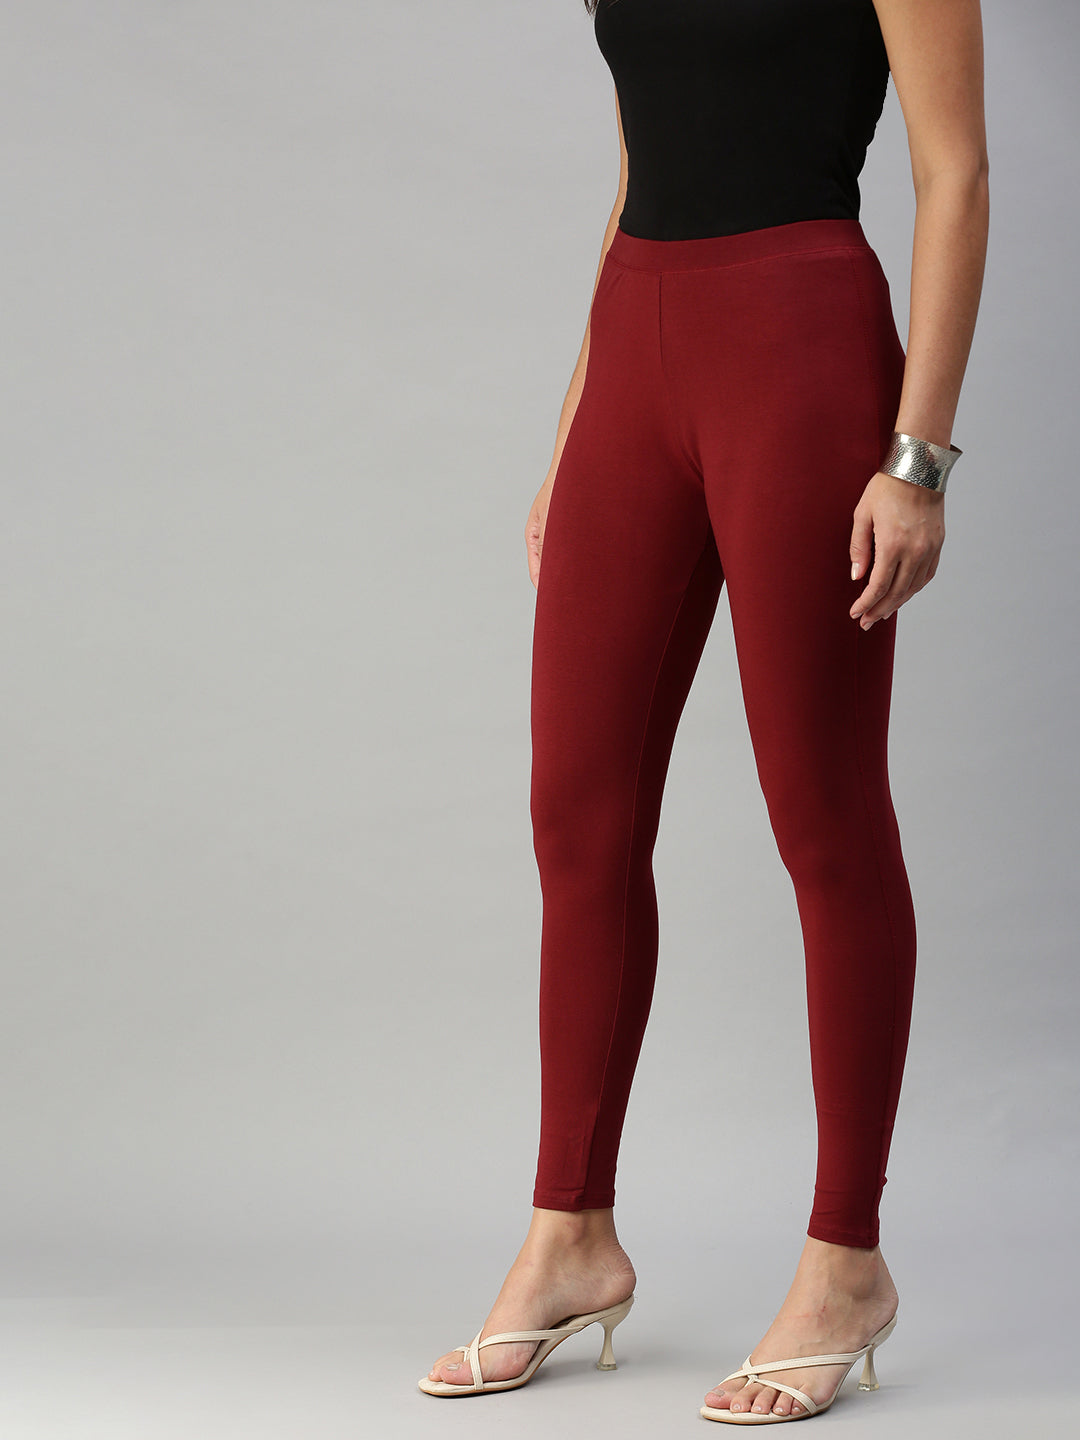 De Moza Women's Yoga Leggings Ankle Length Solid Cotton Lycra Maroon - De Moza